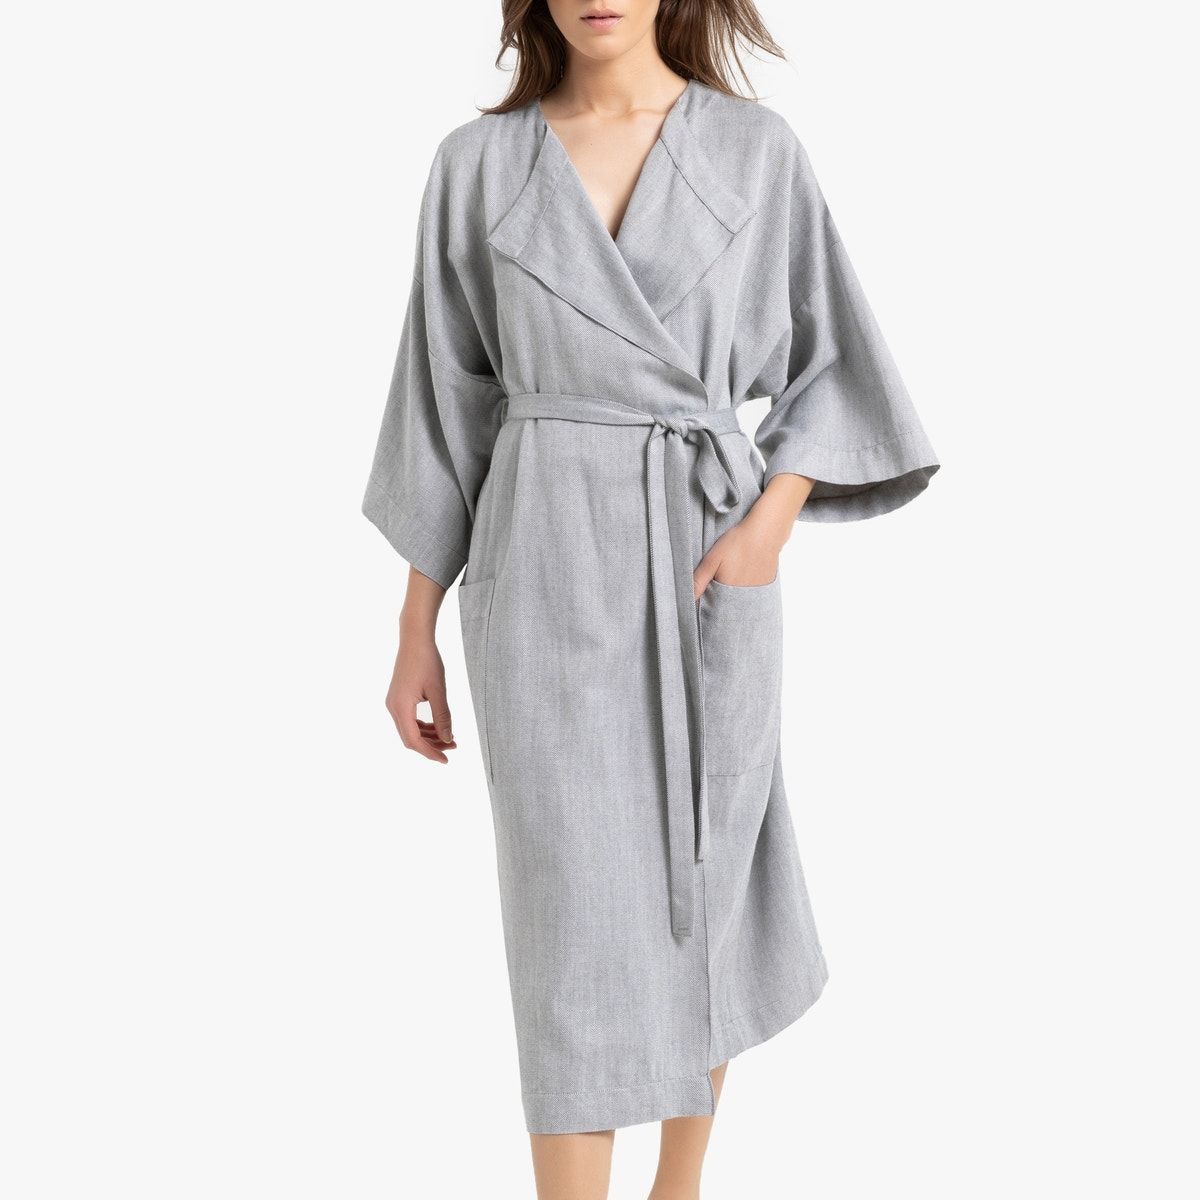 Dolamen Men’s Dressing Gown Bathrobe Satin Belt Pockets Silky Soft & Lightweight Luxury Men’s Kimono Dressing Gown Bath Robe Bridesmaid Housecoat Nightwear Pyjamas 